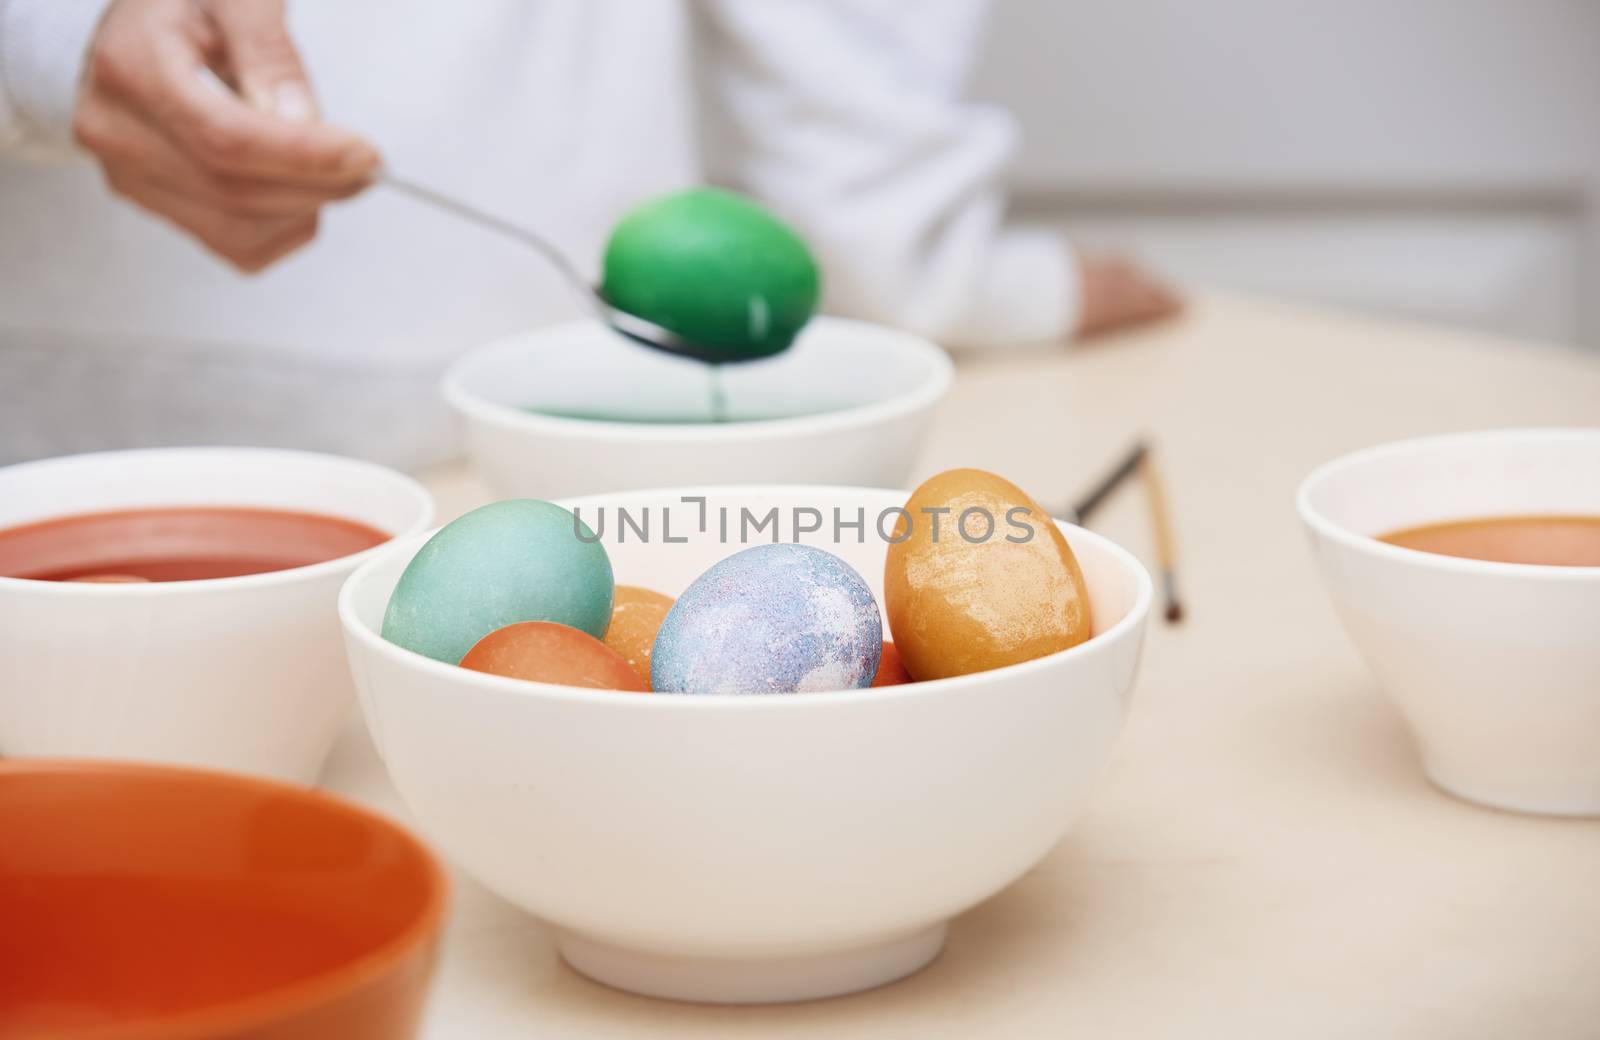 Woman preparing Easter eggs